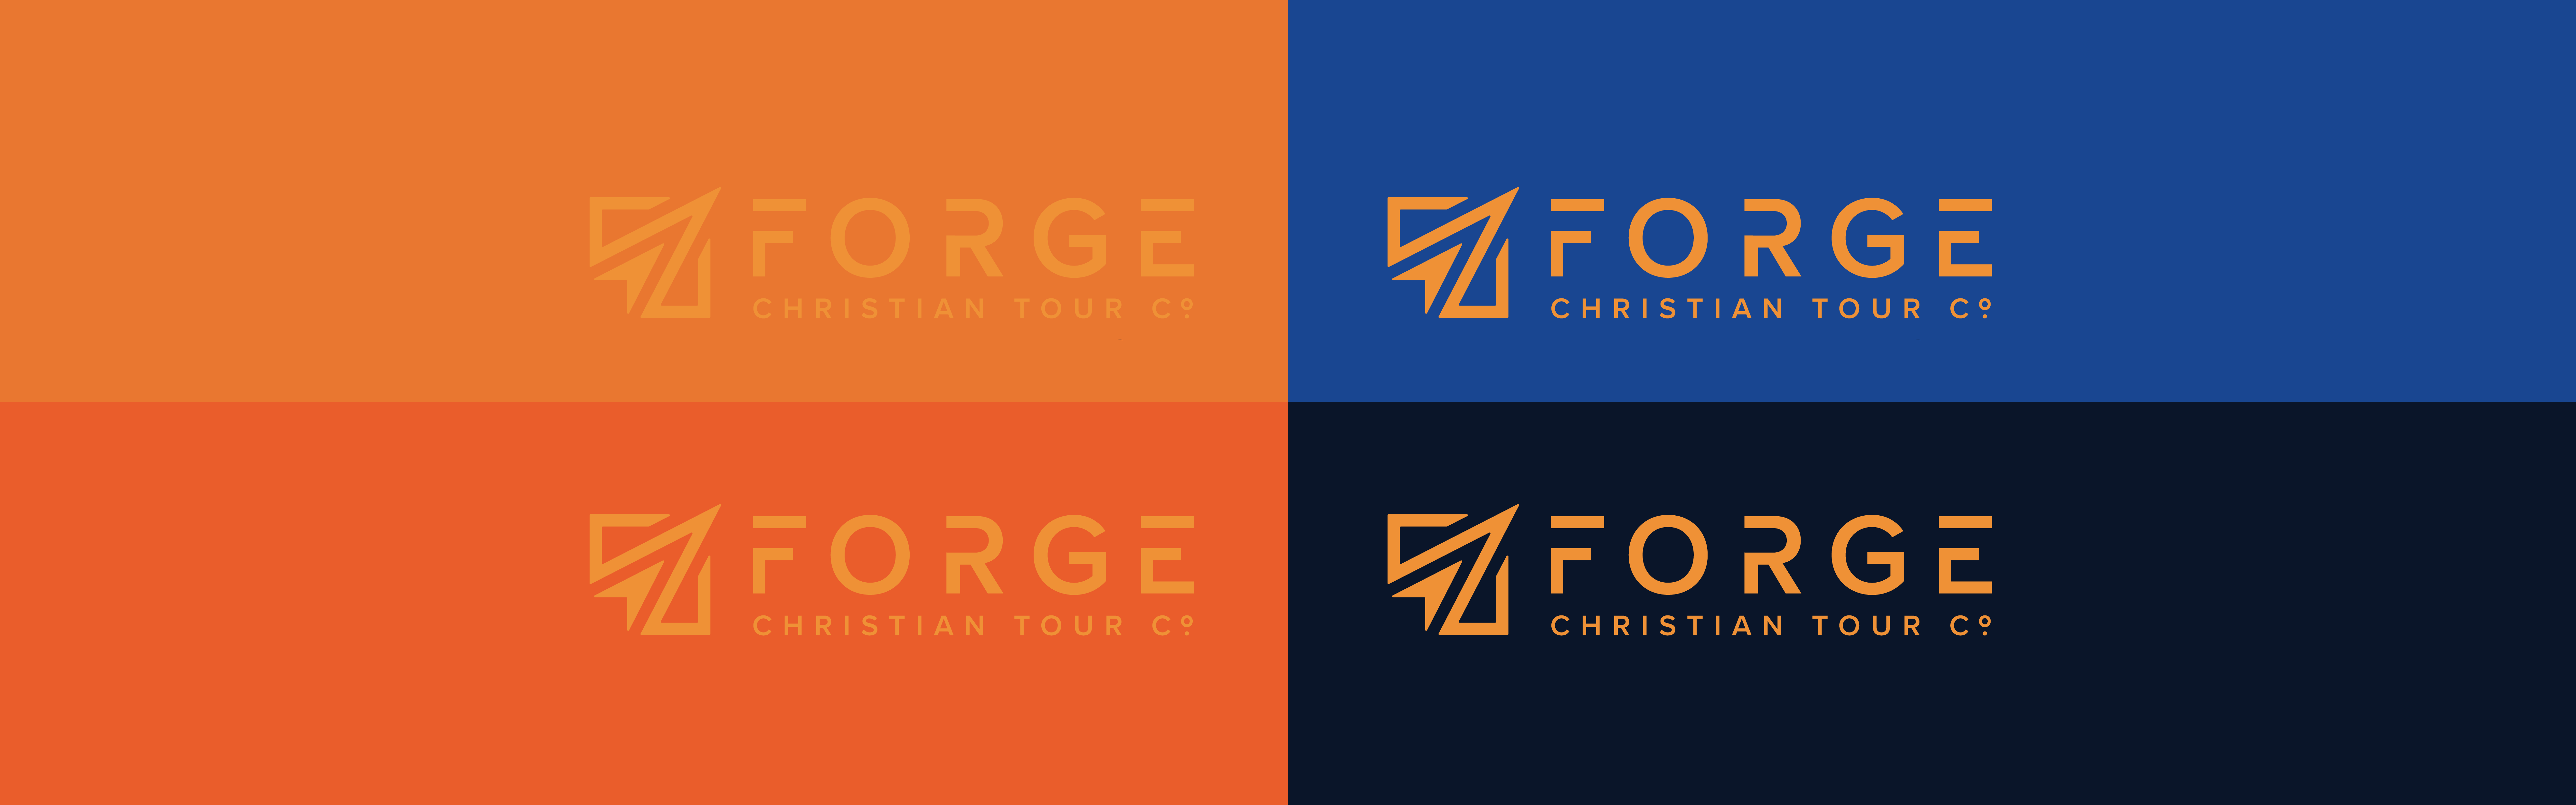 Forge Christian Tour Co logo design